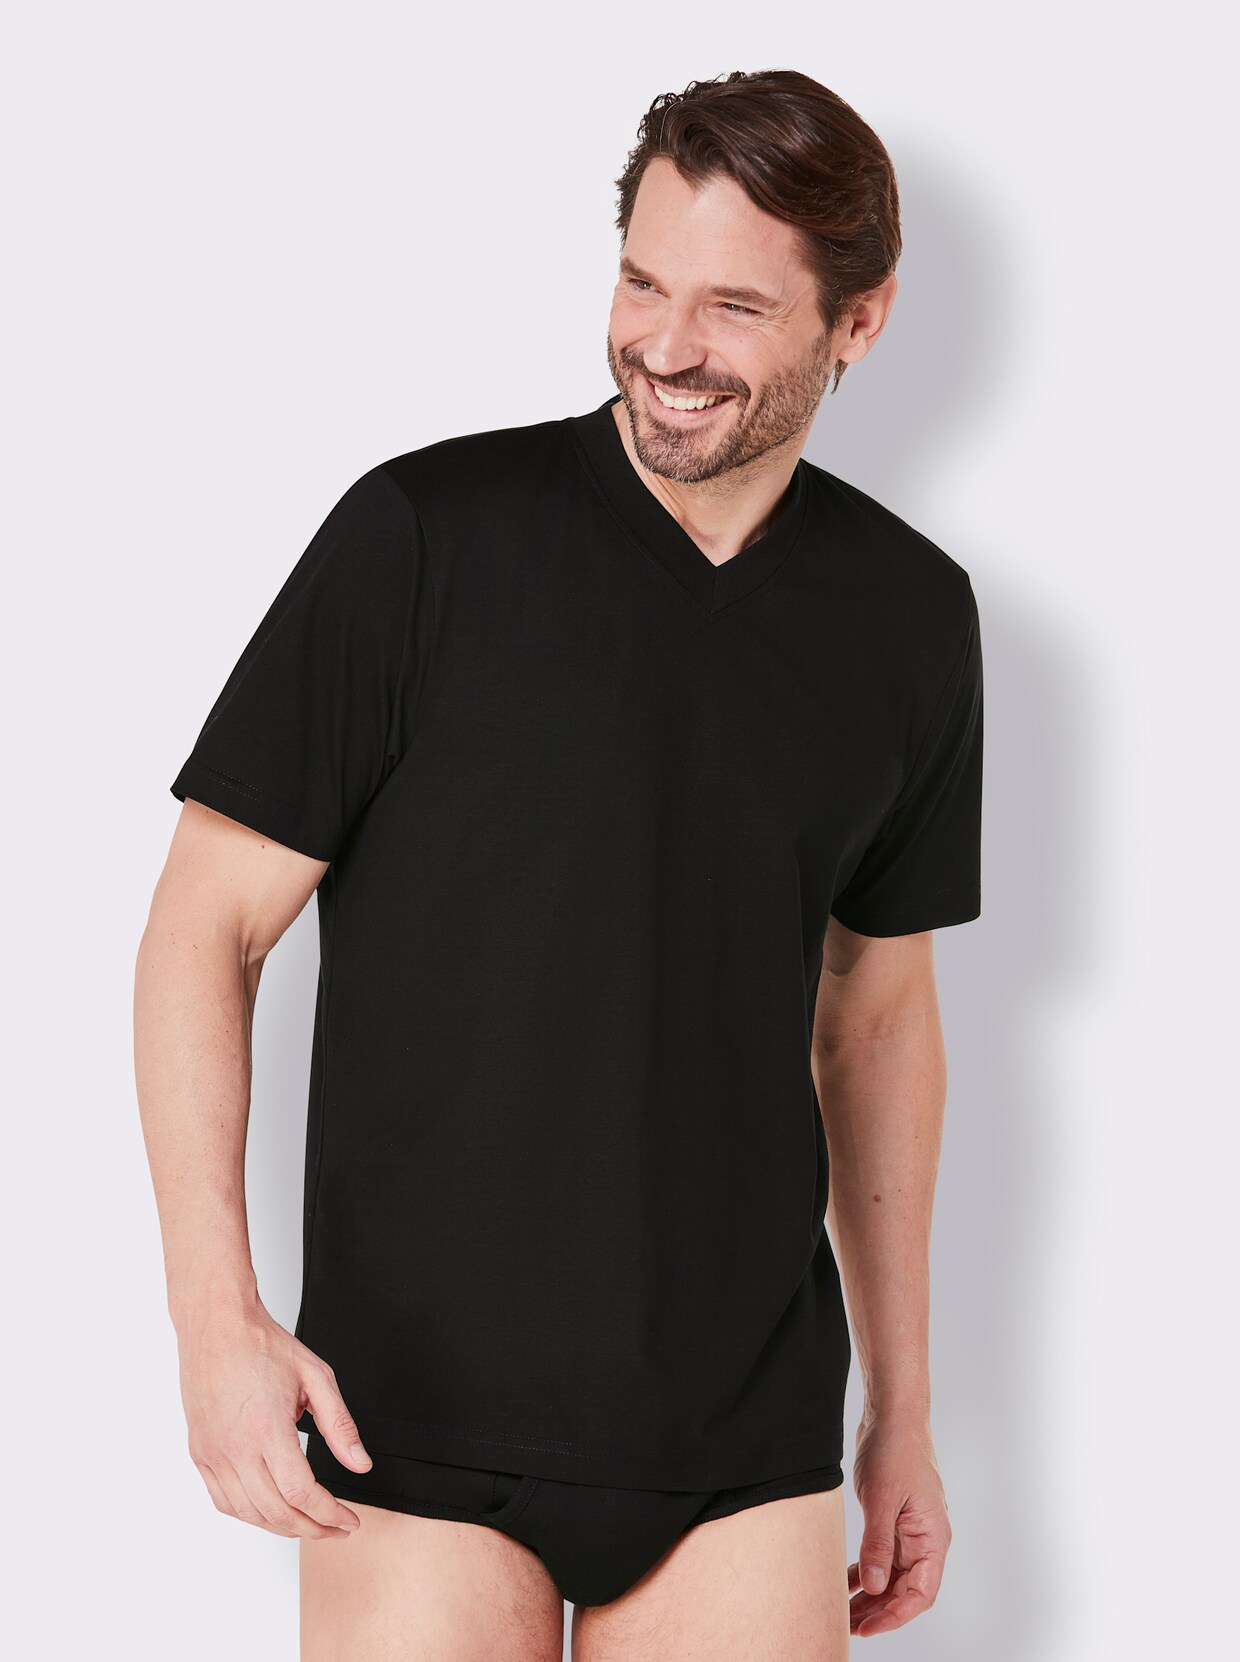 KINGsCLUB Shirt - schwarz + grau-meliert + marine